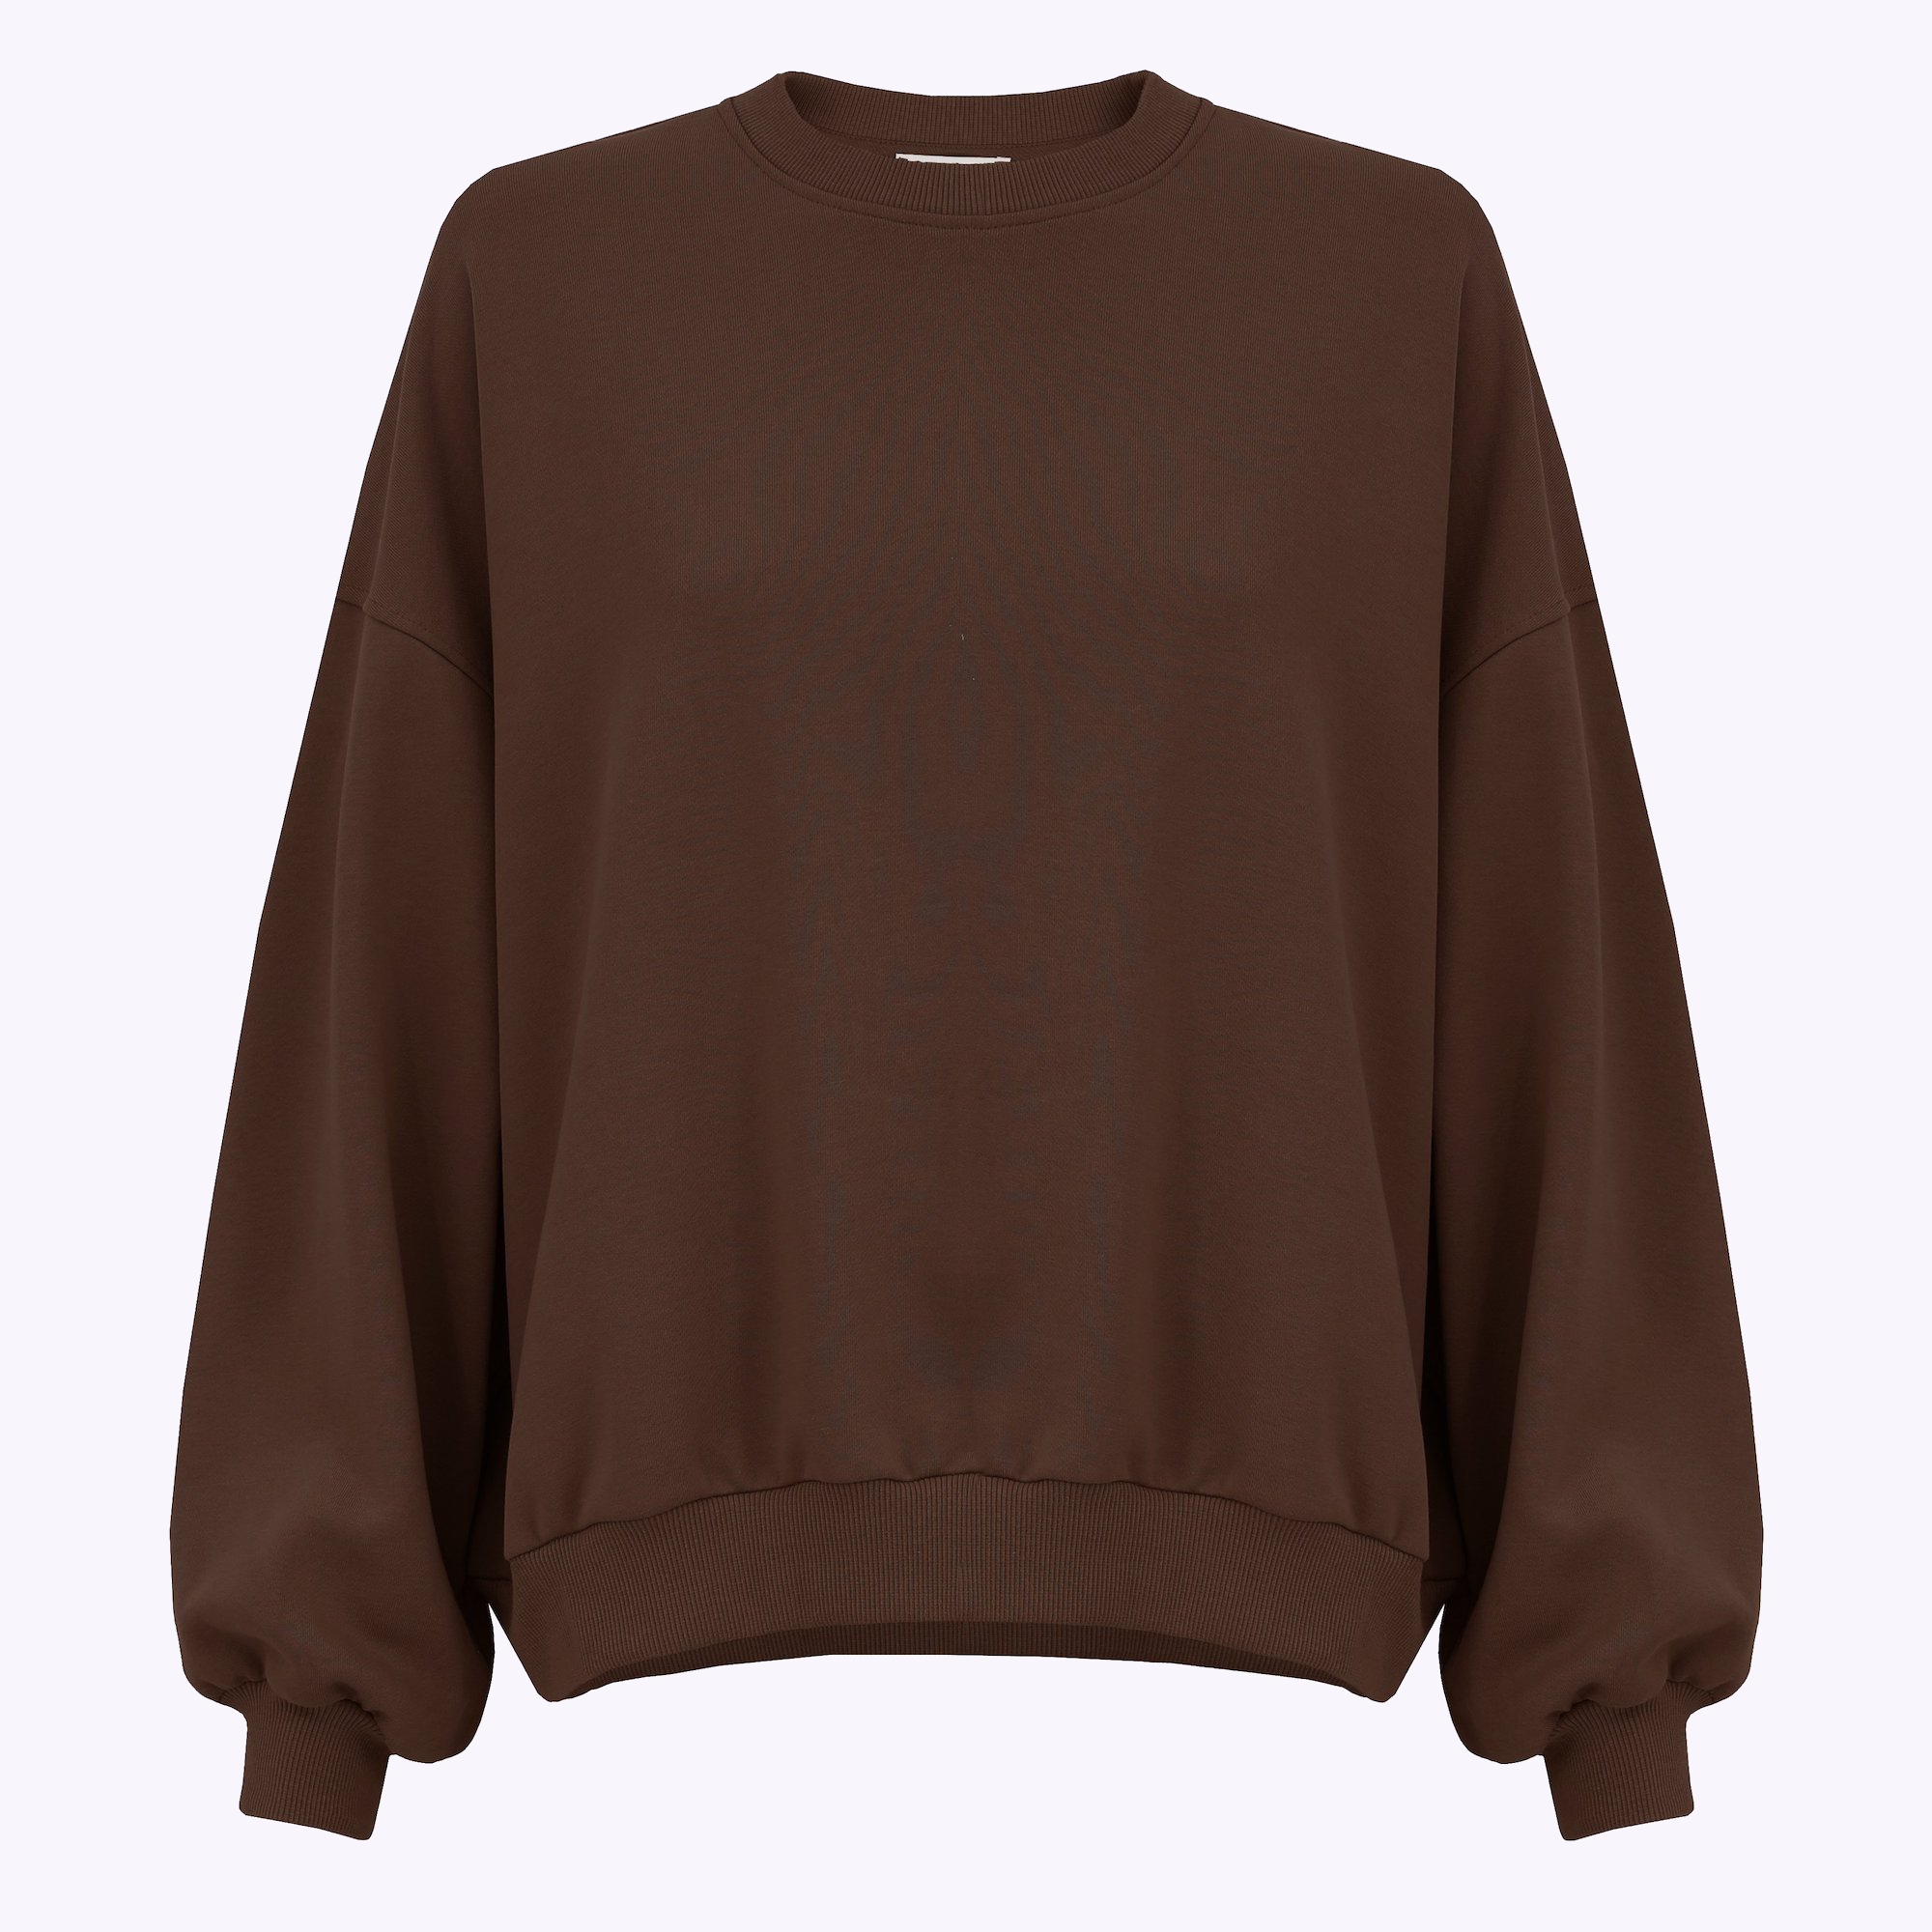 Sweatshirt in organic cotton / 17 / 12 / hazelnut